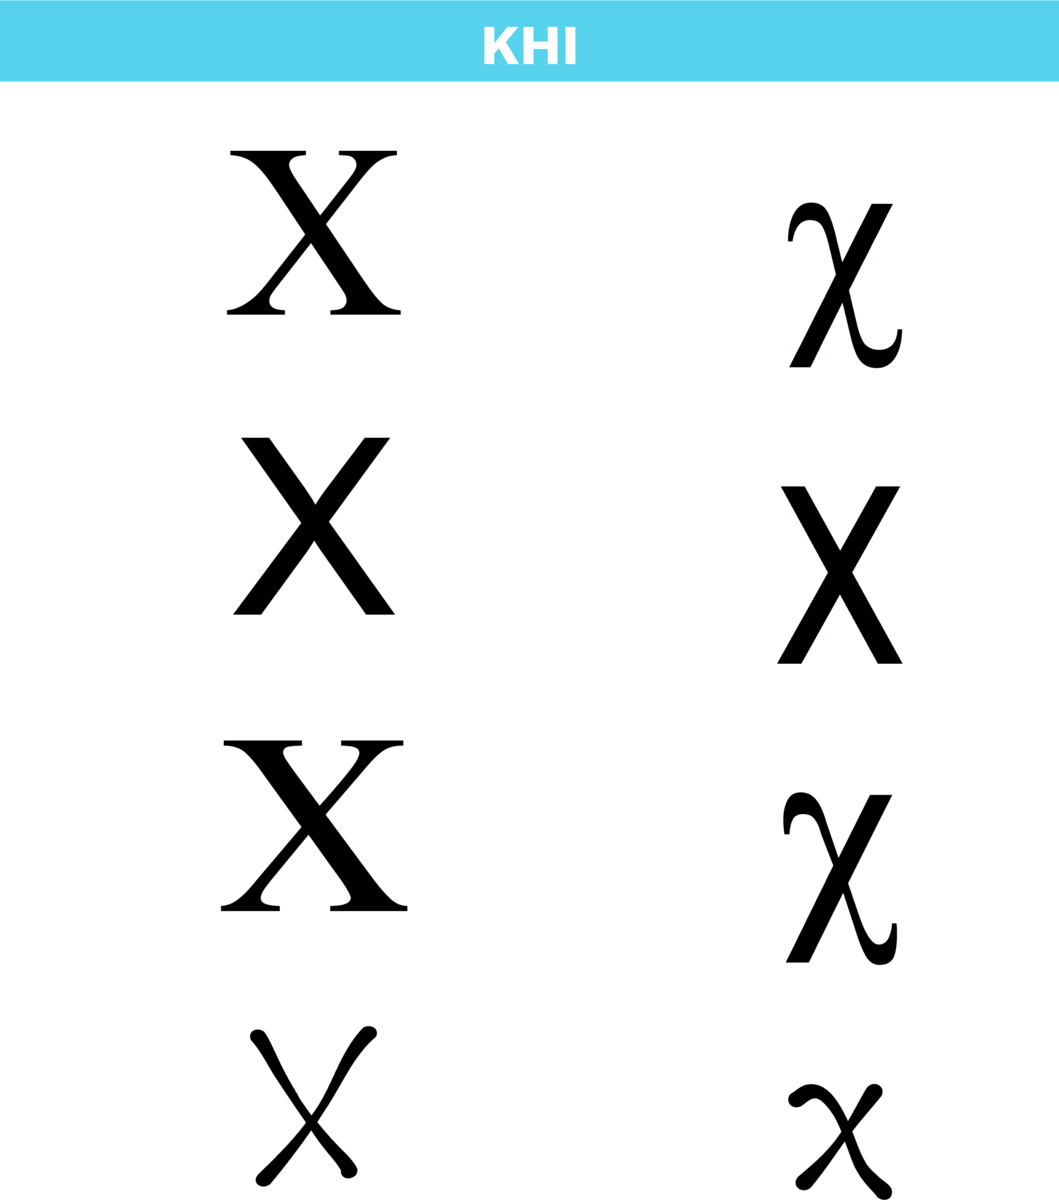 Bokstaven khi i det greske alfabetet i ulike skrifttyper